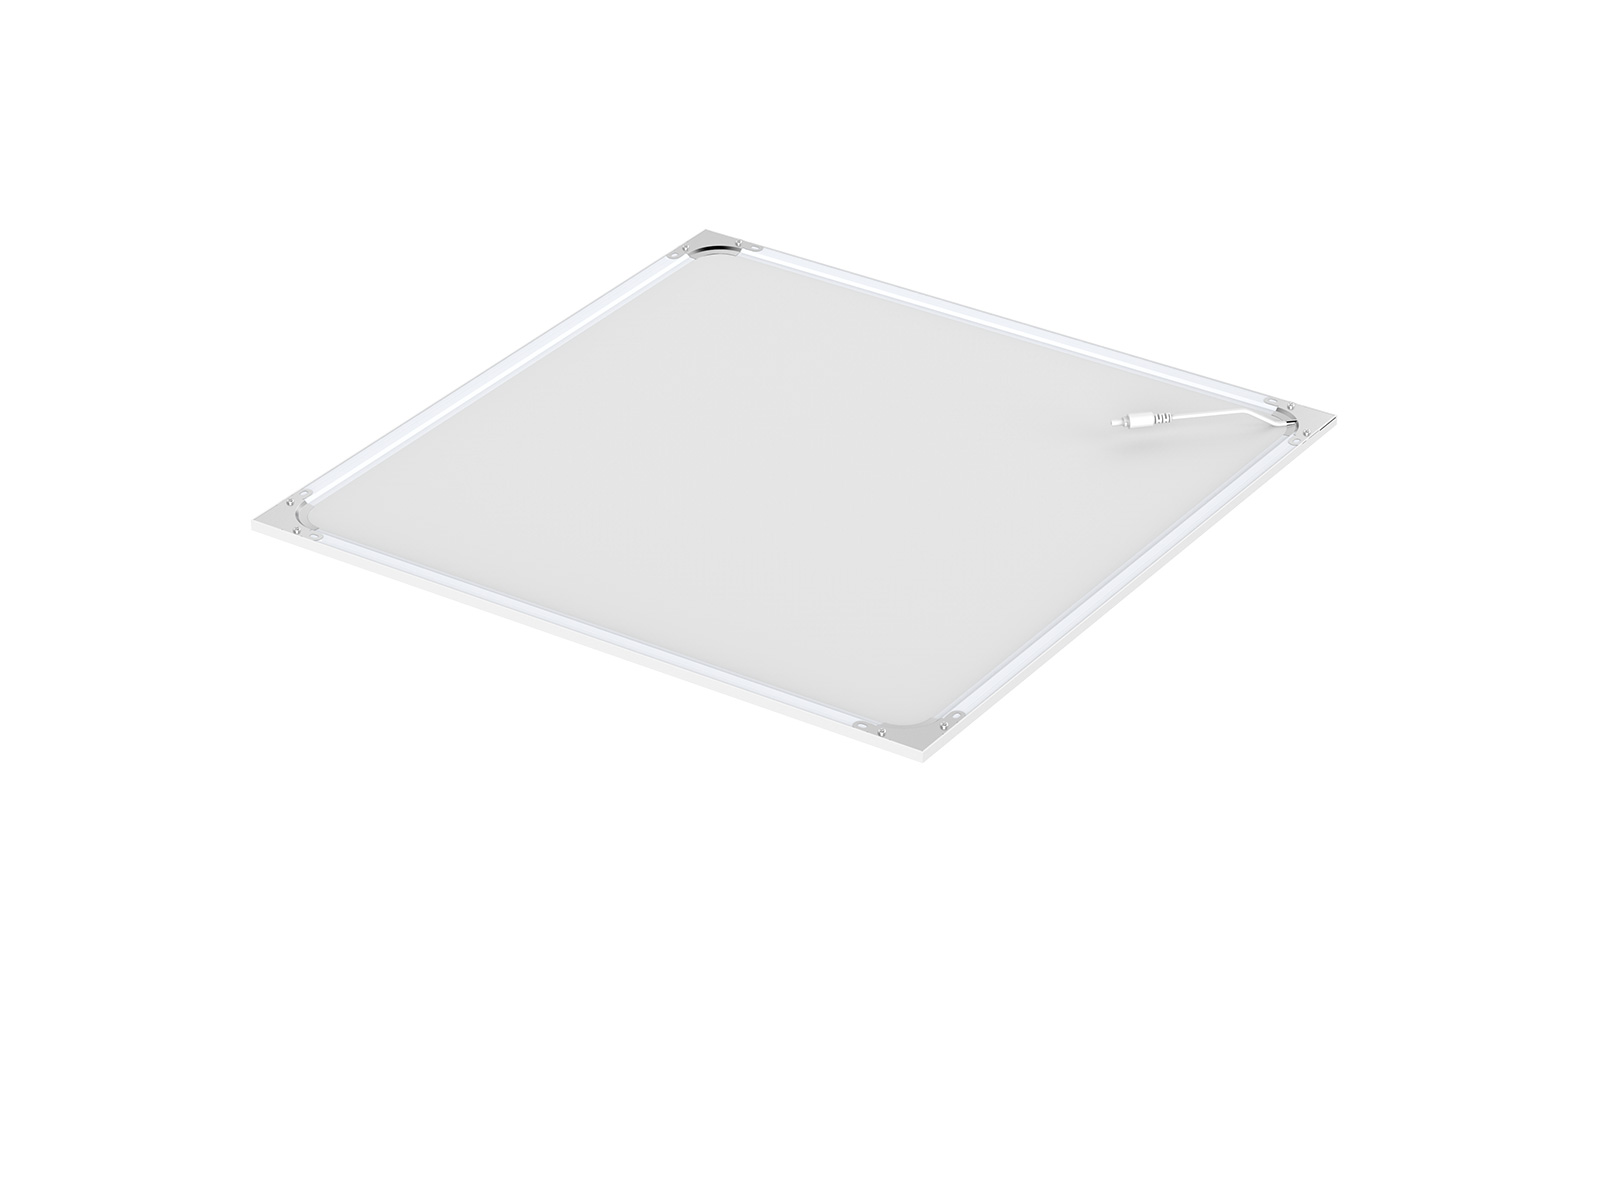 PL CL ceiling light diffuser panel